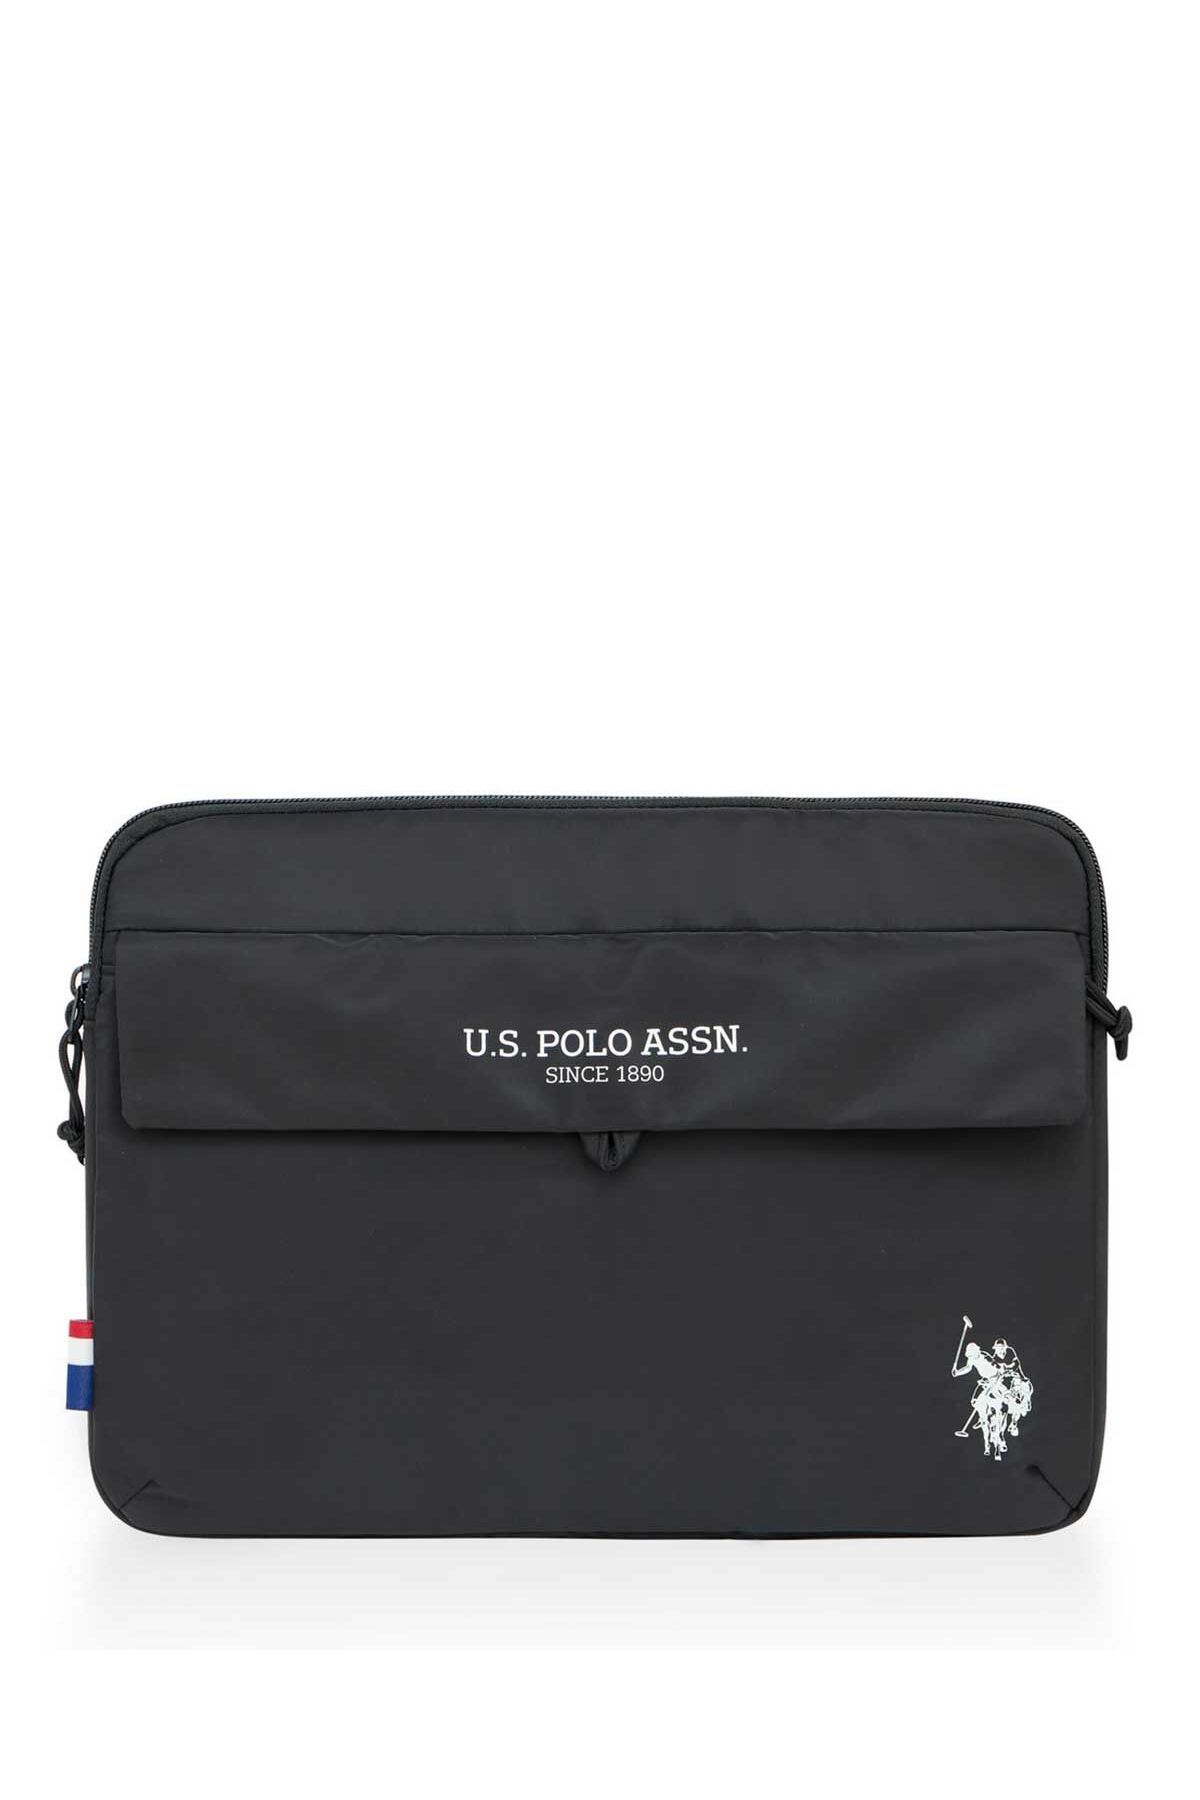 U.S. Polo Assn. U.s. Polo Assn. Macbook Air - Macbook Pro 13&13.3 İnç Uyumlu Laptop Kılıfı Siyah PLEVR23685